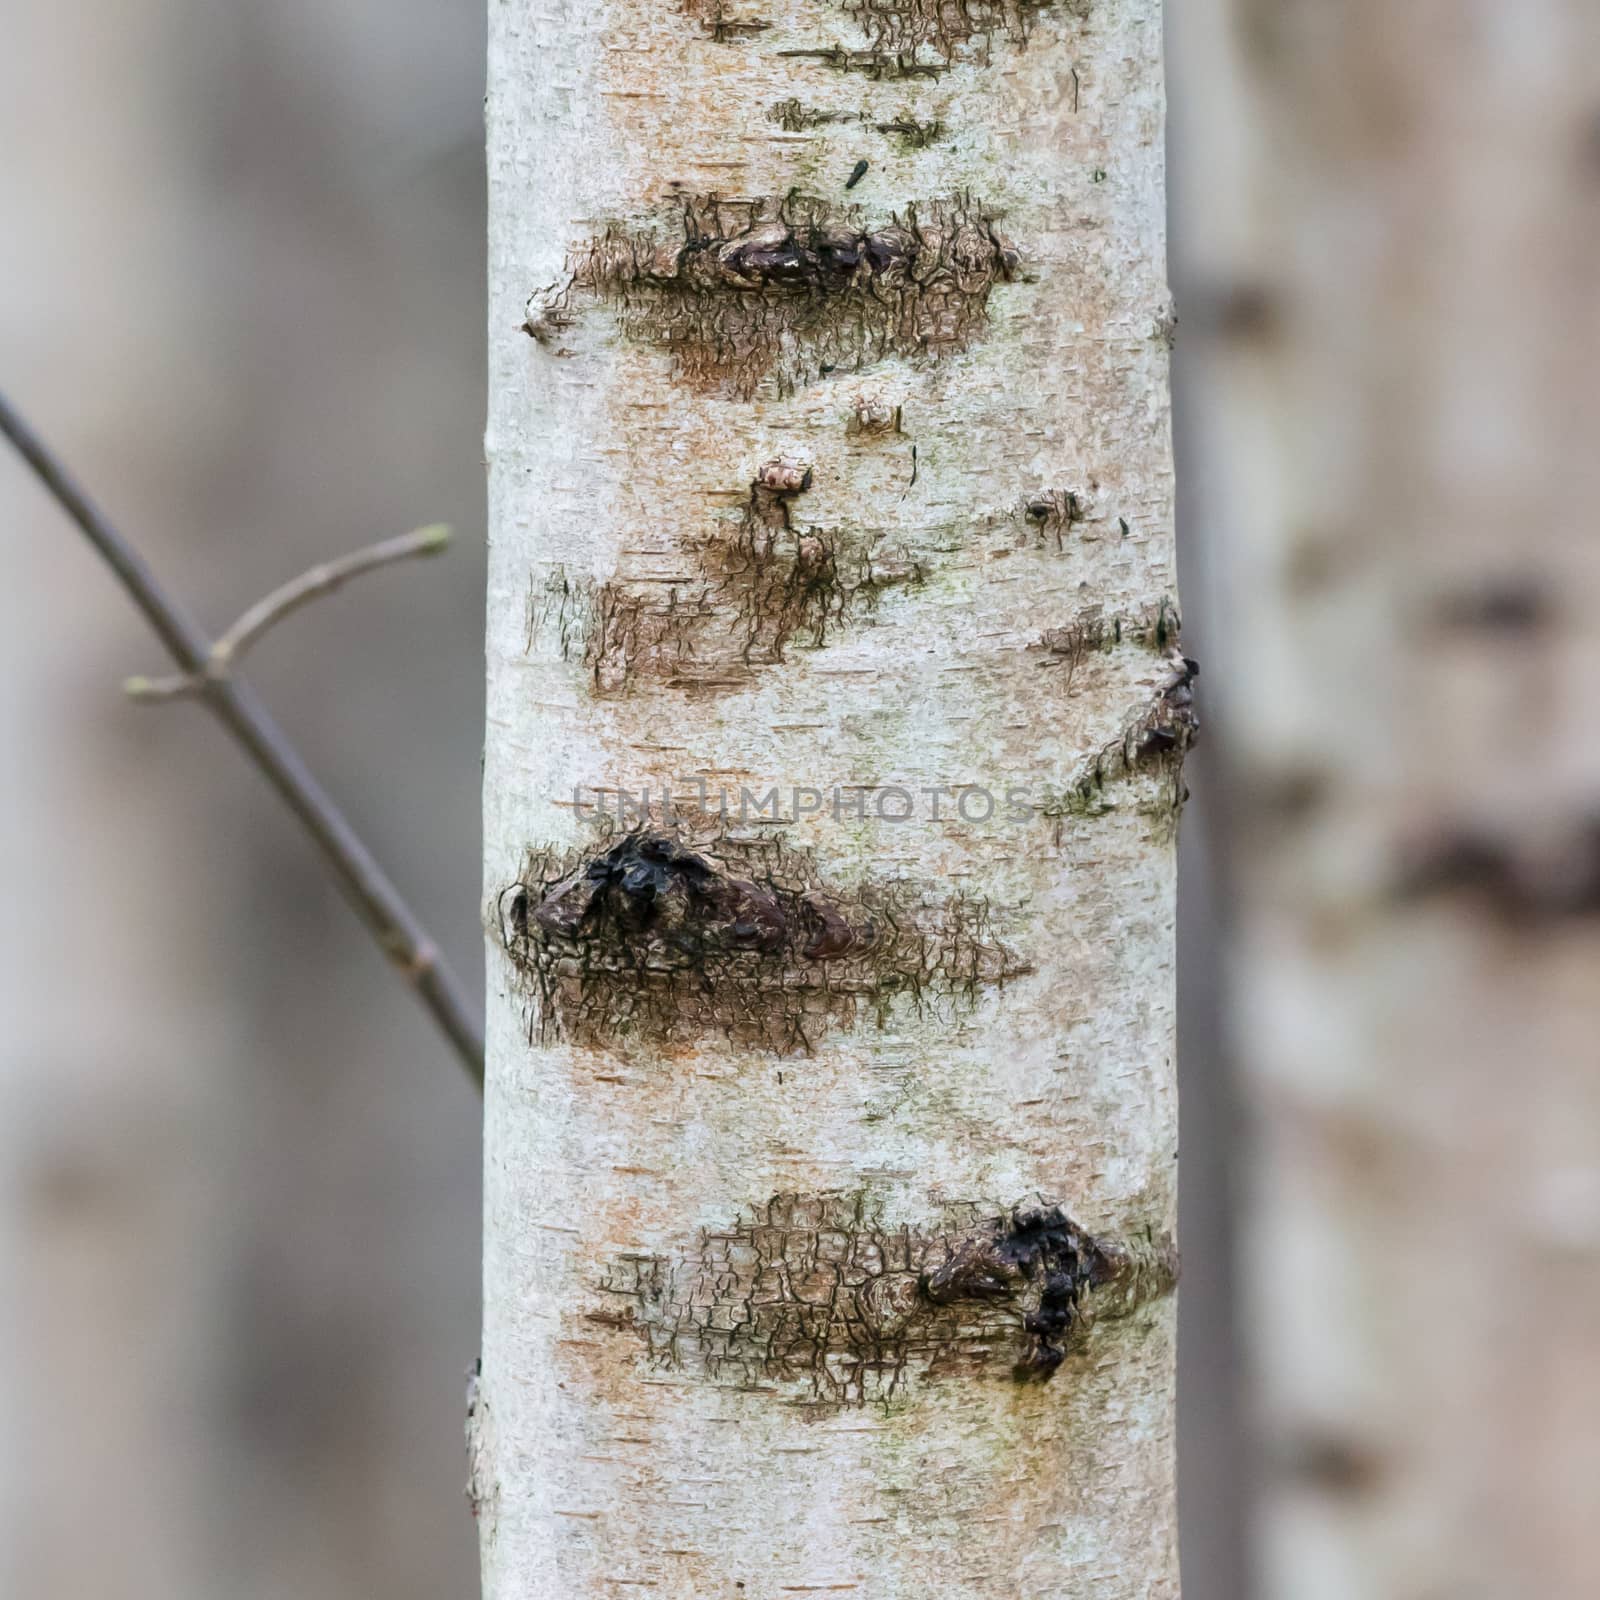 Birch trunk in nature by michaklootwijk